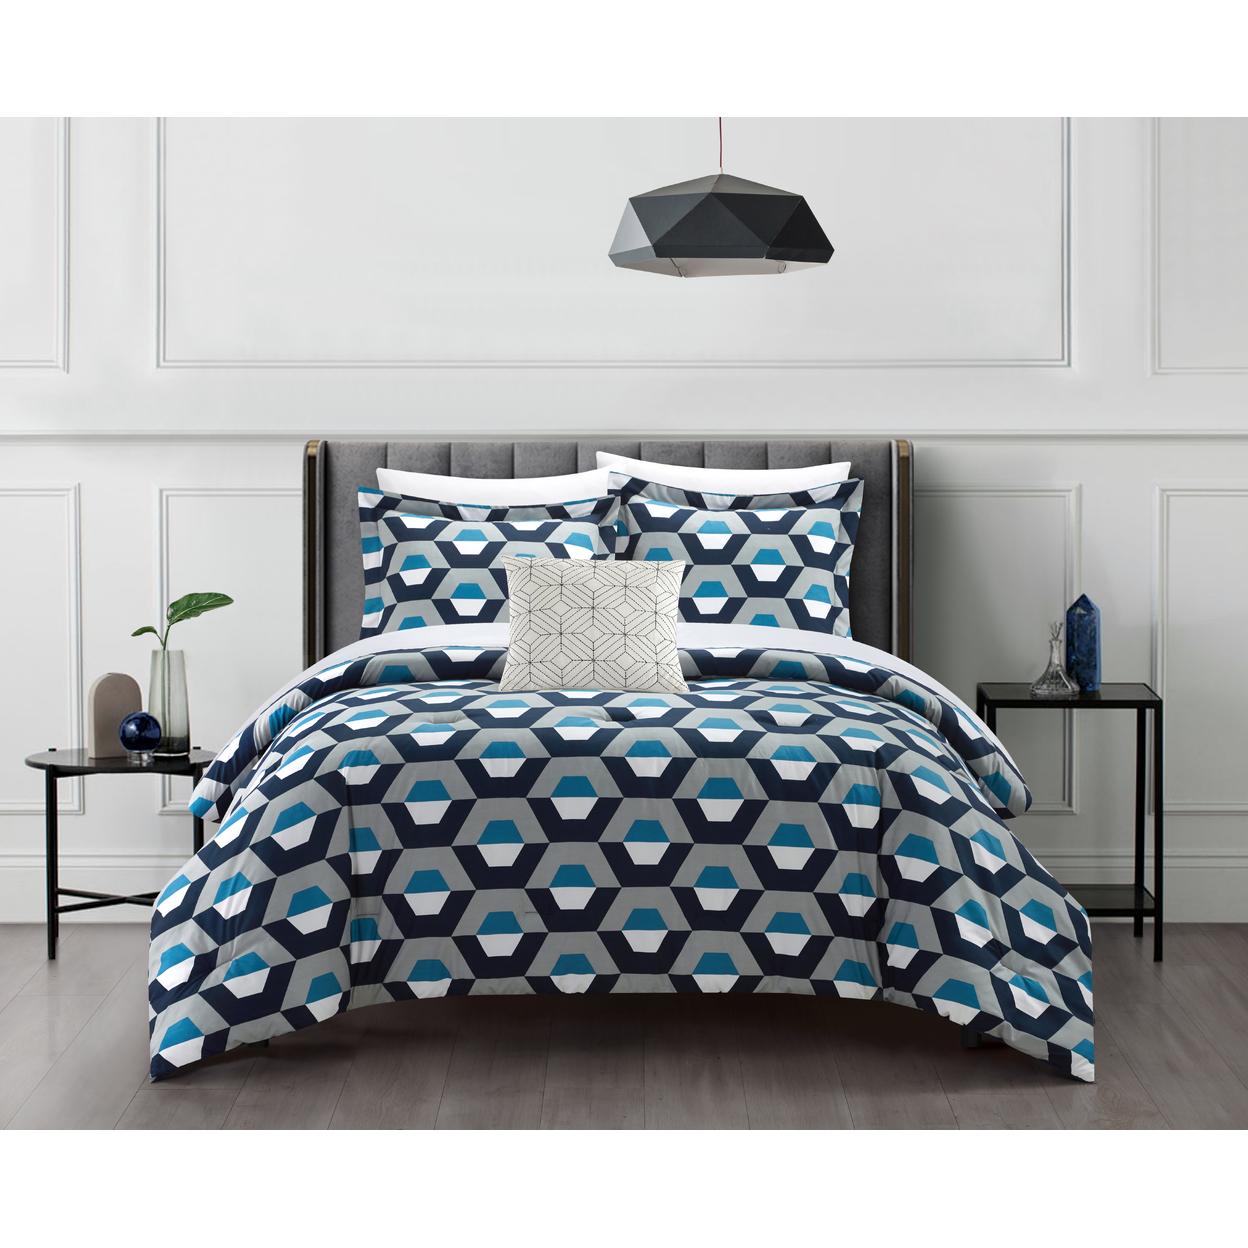 Matheus 4 Or 3 Piece Comforter Set Contemporary Geometric Hexagon Pattern Print Design Bedding - Blue, Queen - 4 Piece